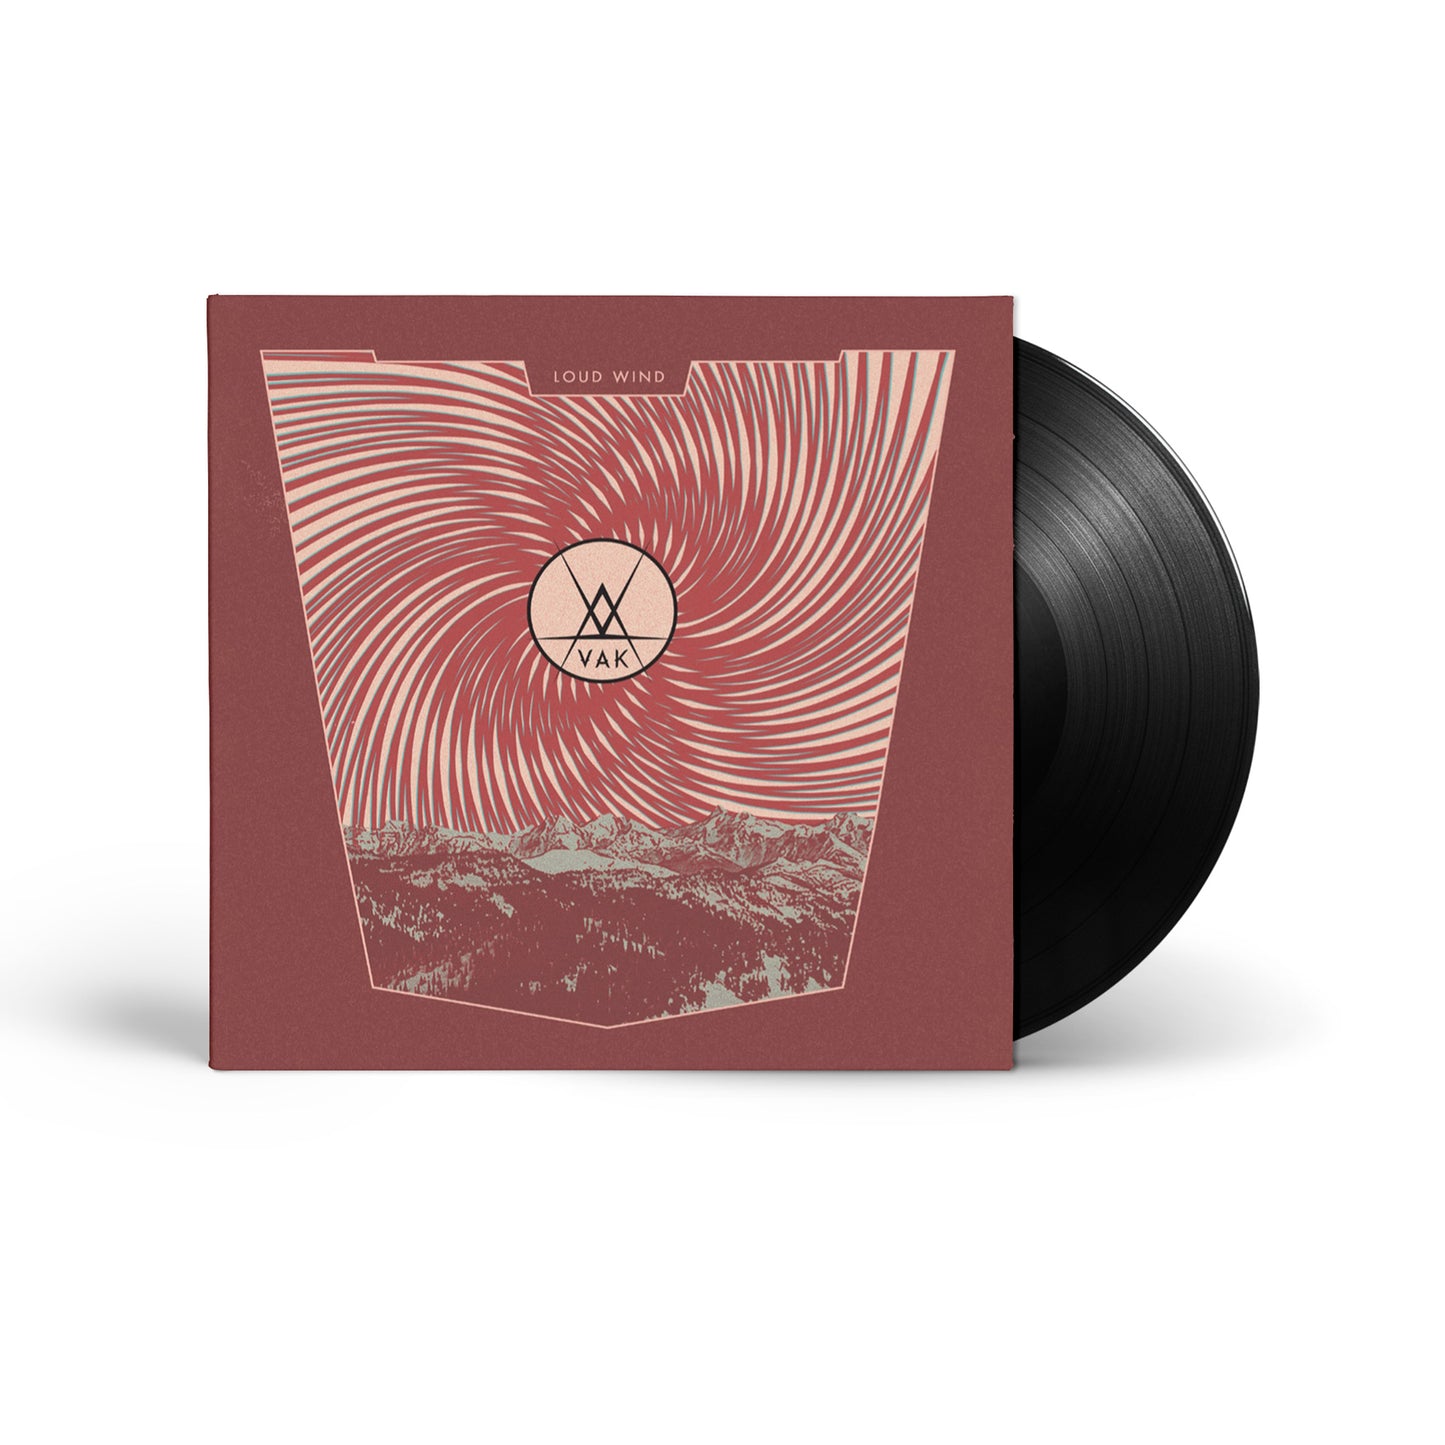 VAK - Loud Wind (LP)